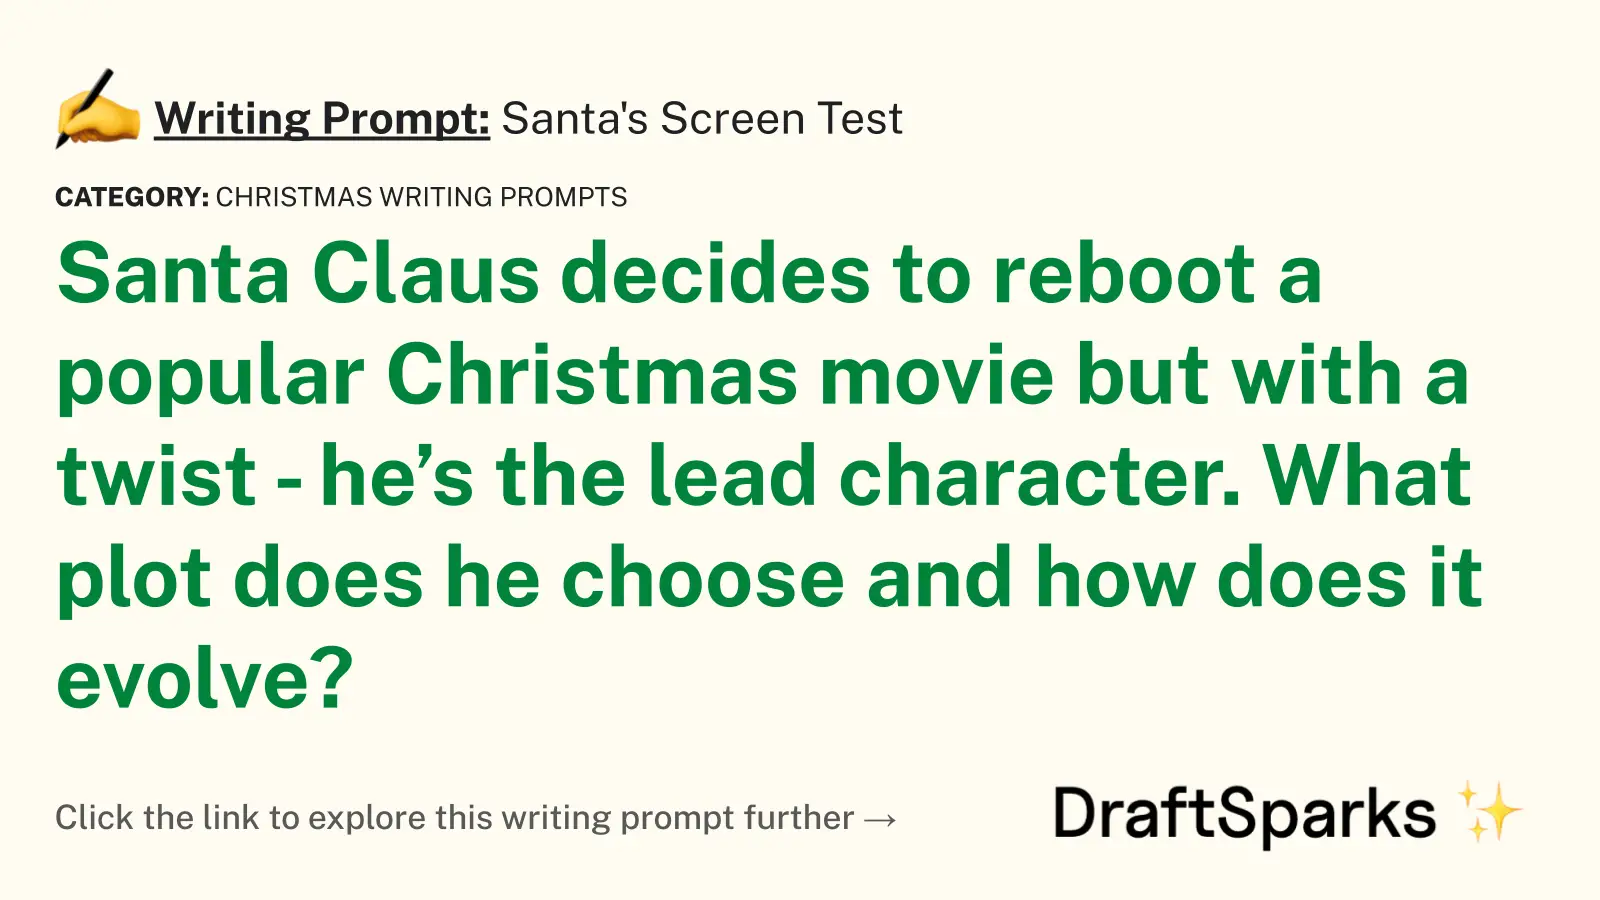 Santa’s Screen Test